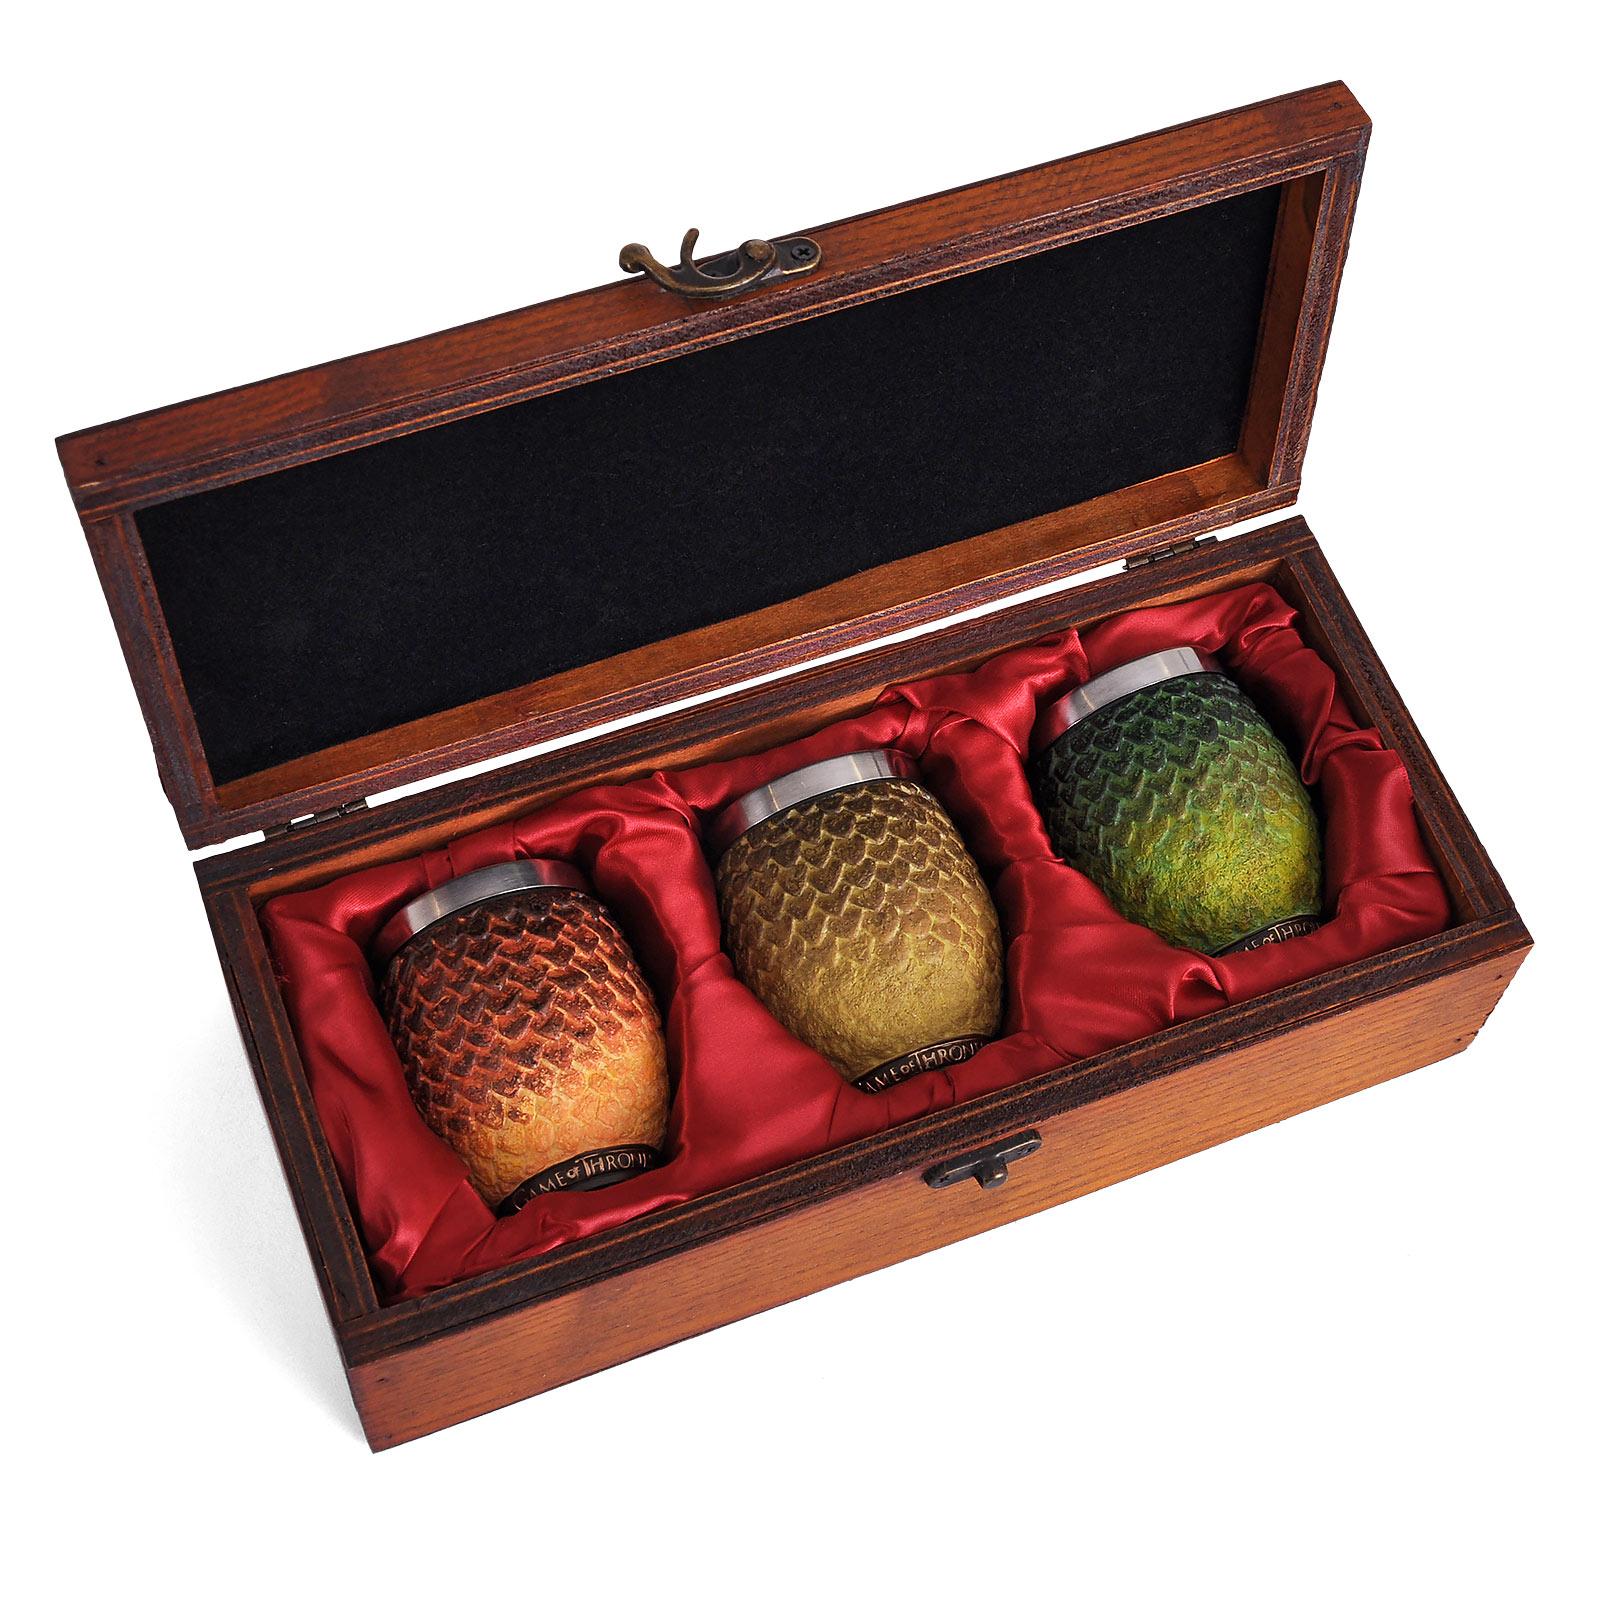 Game of Thrones - dragon eggs mug set deluxe